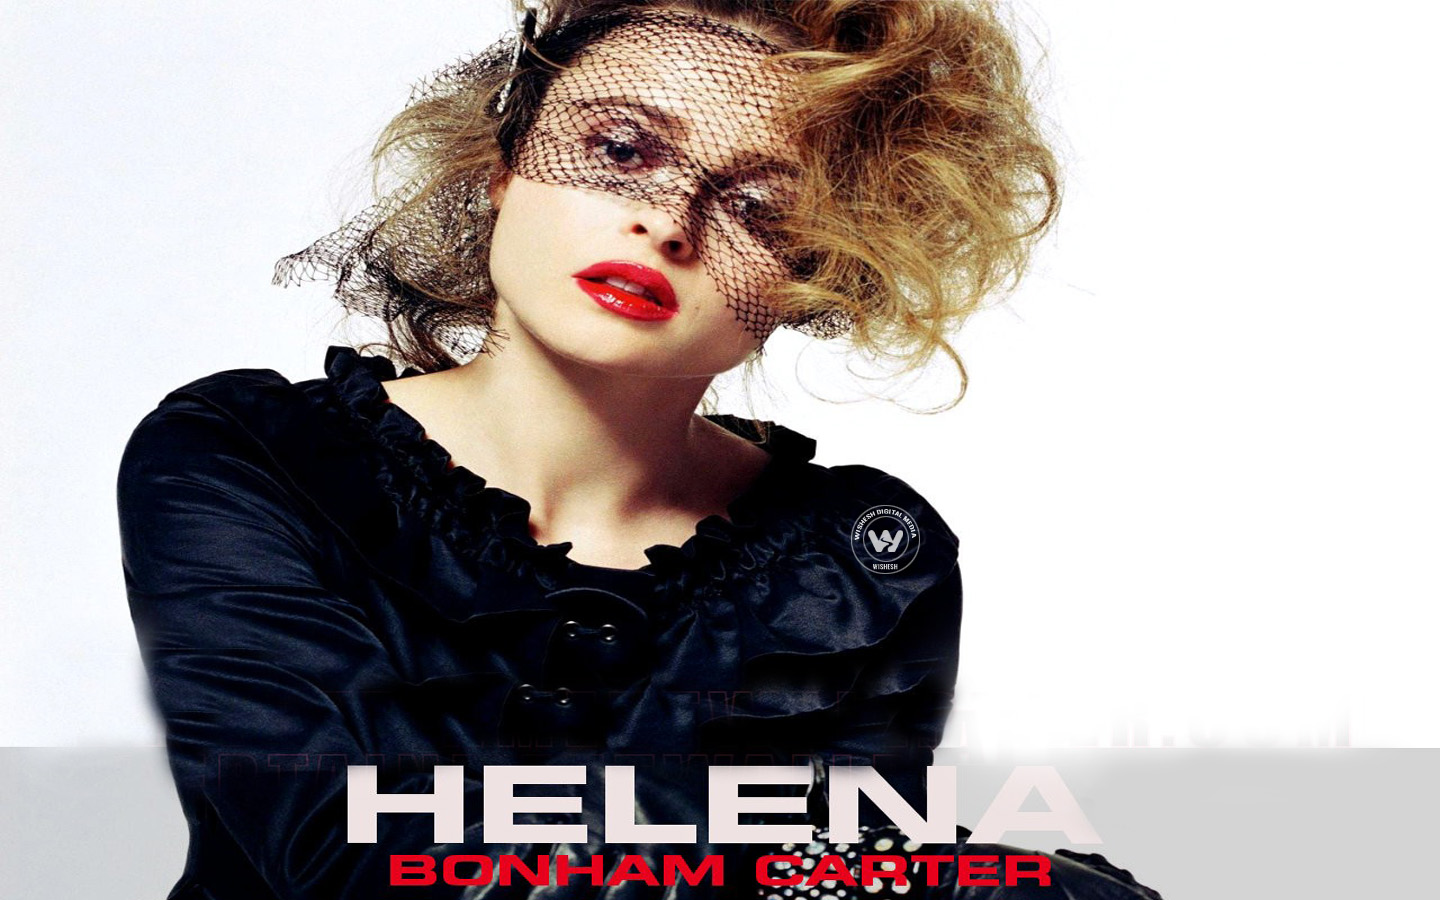 Helena Bonham Carter | Actress Helena Bonham Carter | Wallpaper 2of 14 | Helena Bonham Carter Hot Wallpapers